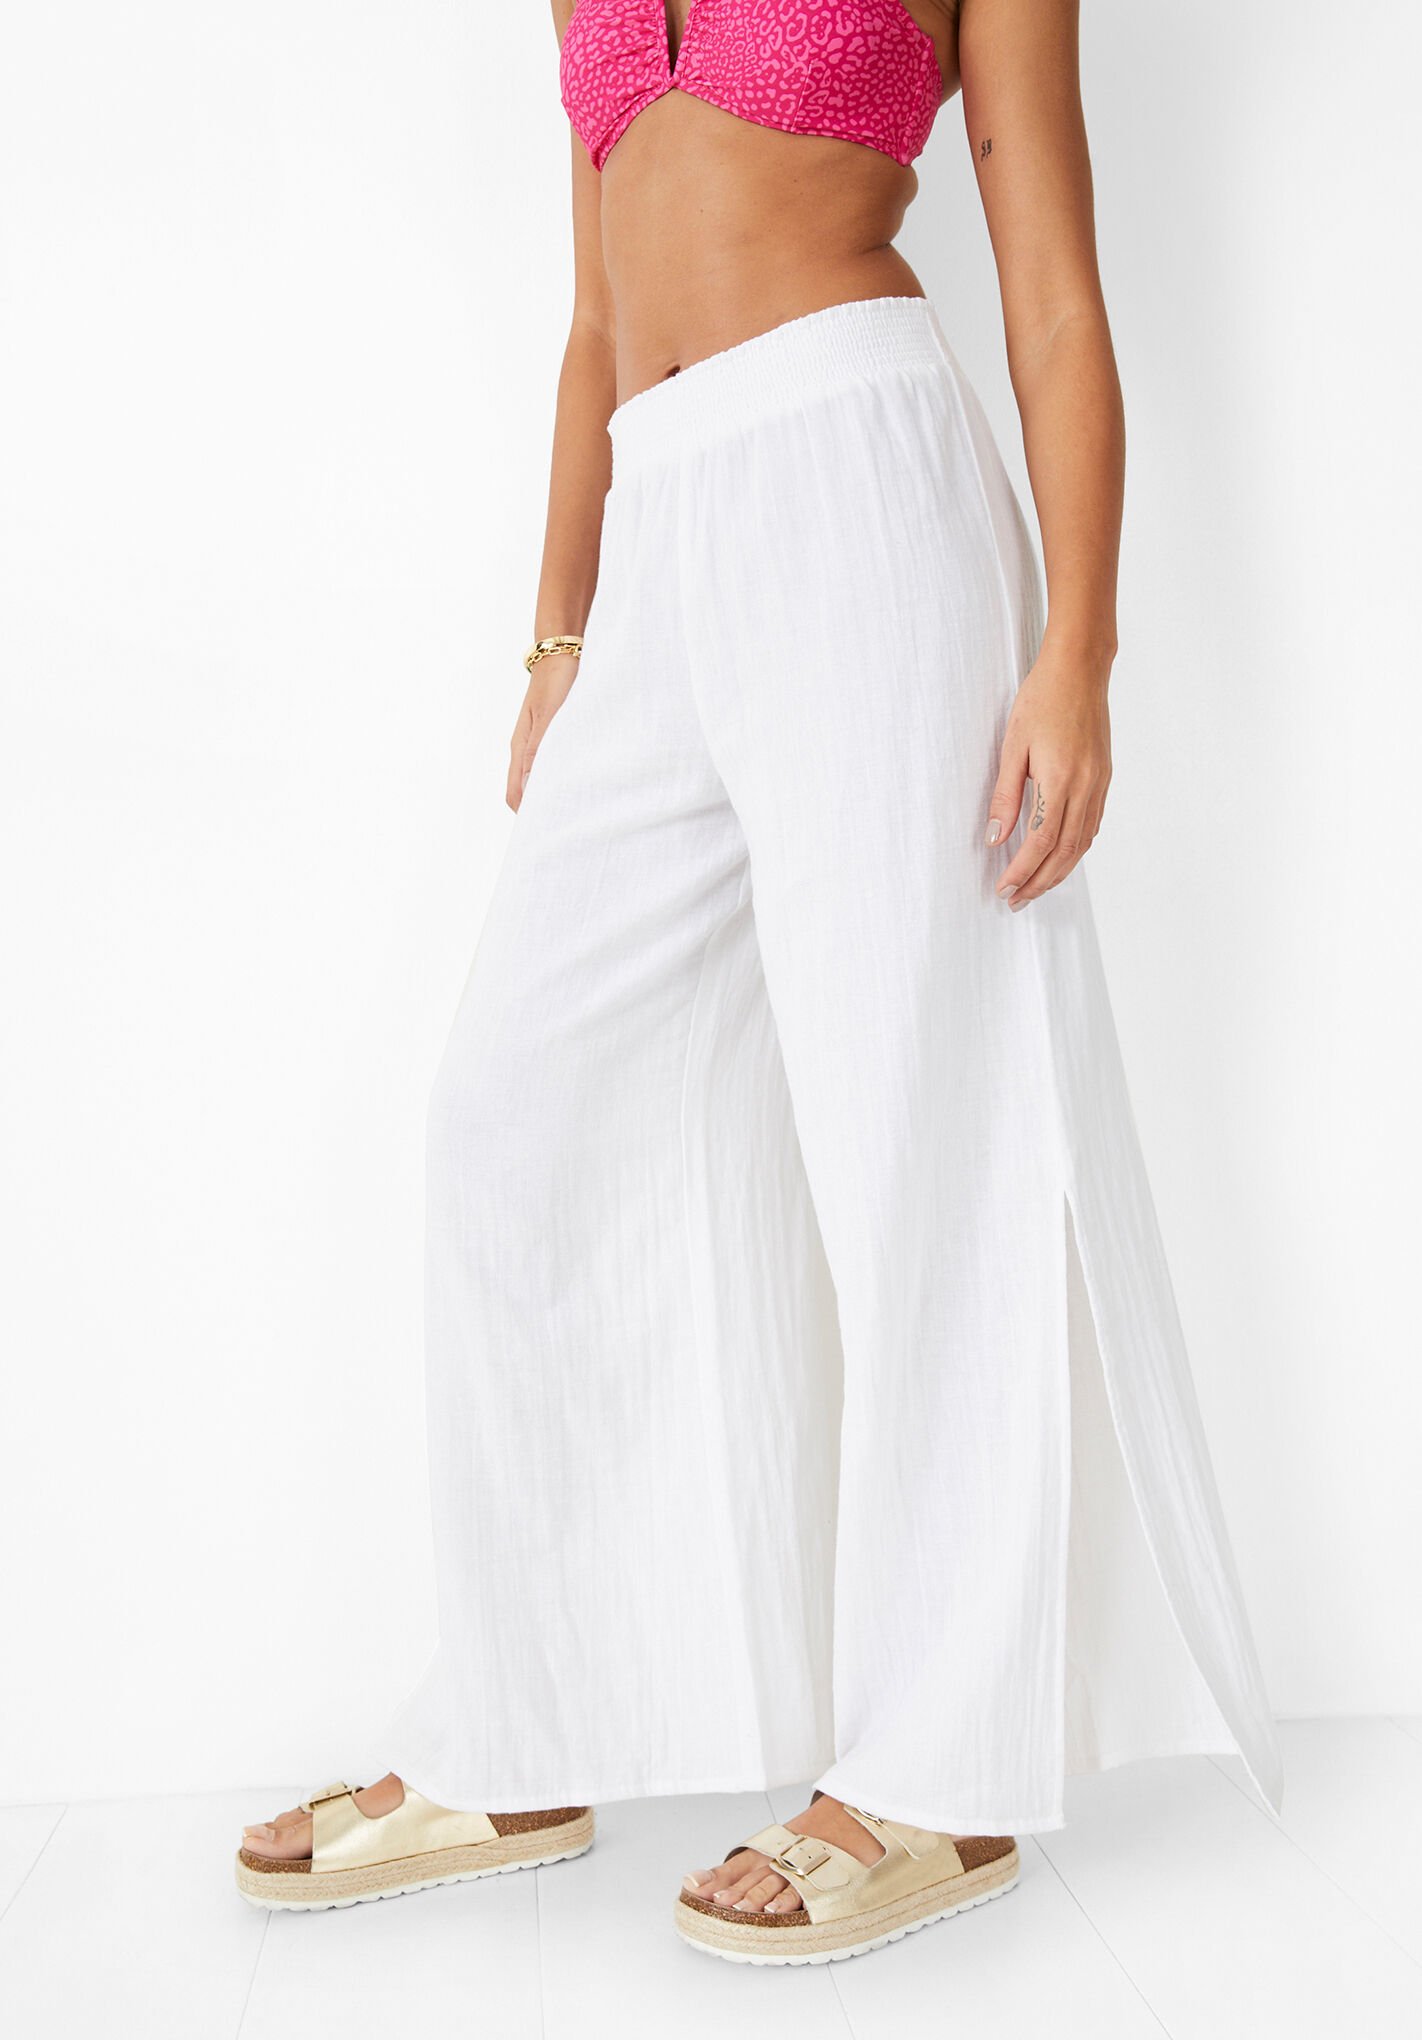 Boohoo Textured Linen Look Tassel Wide Leg Beach Pants in White  Lyst UK